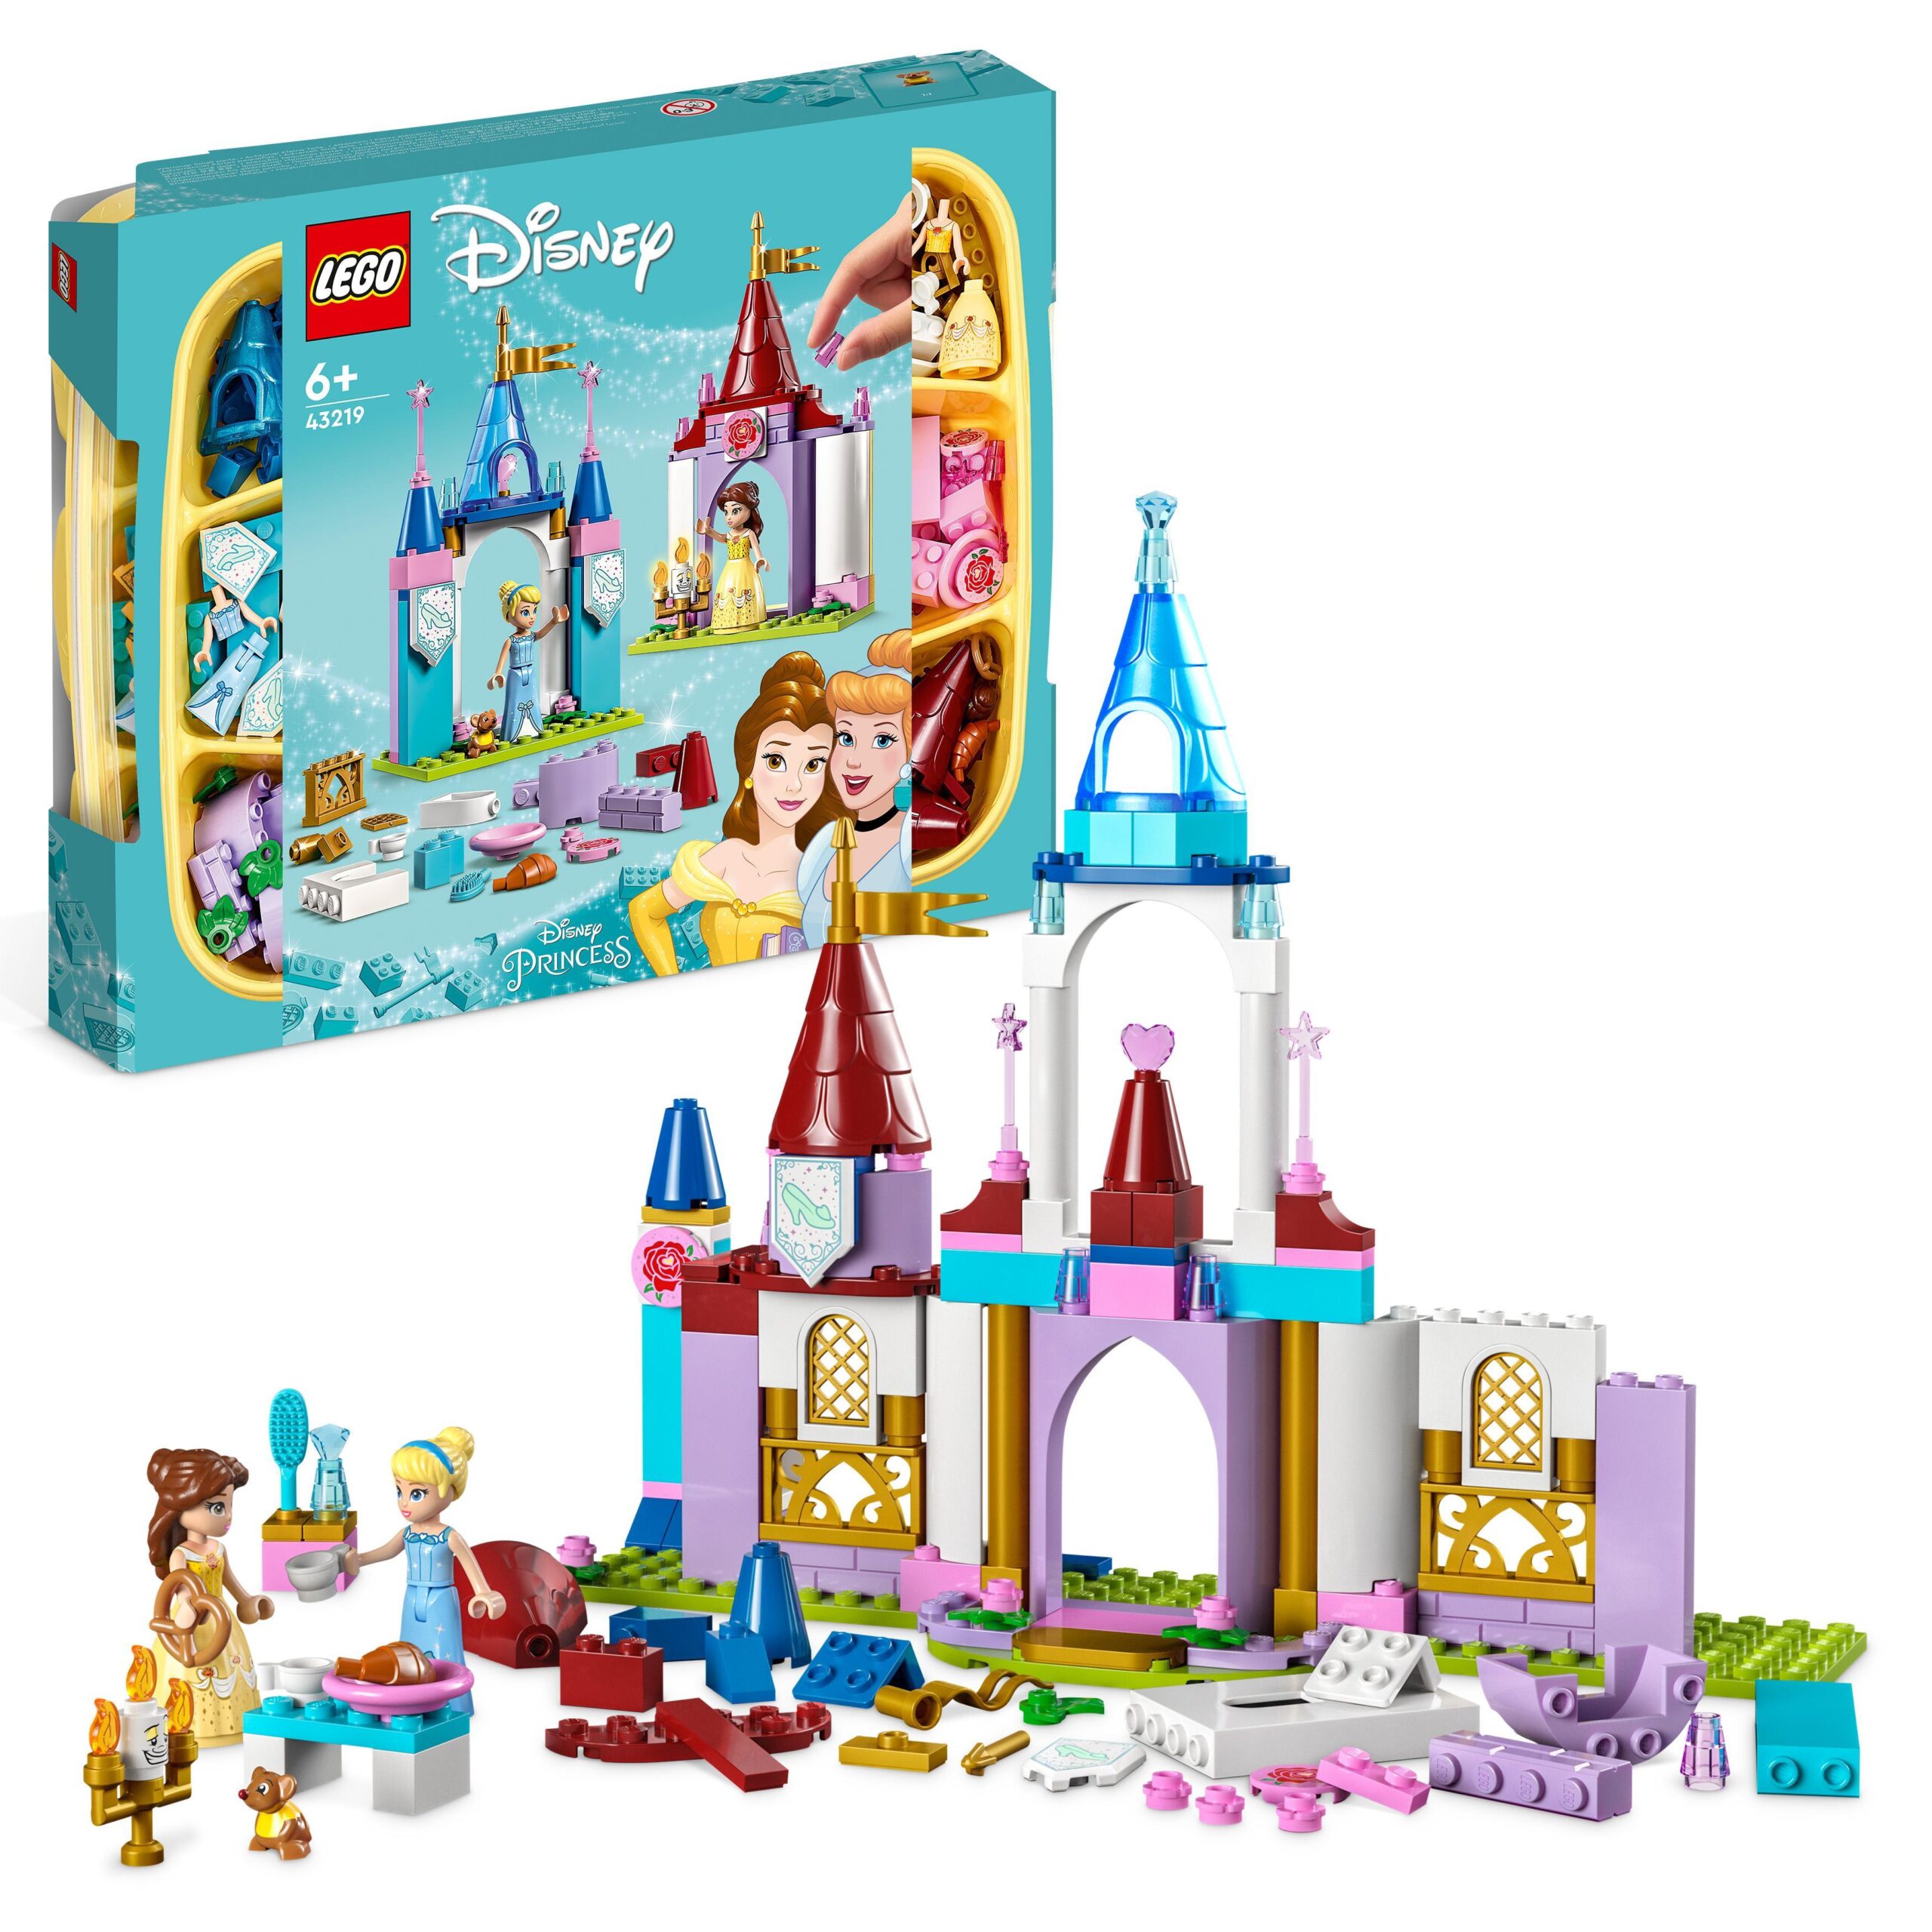 Lego disney princess 43219 castelli creativi, set con castello